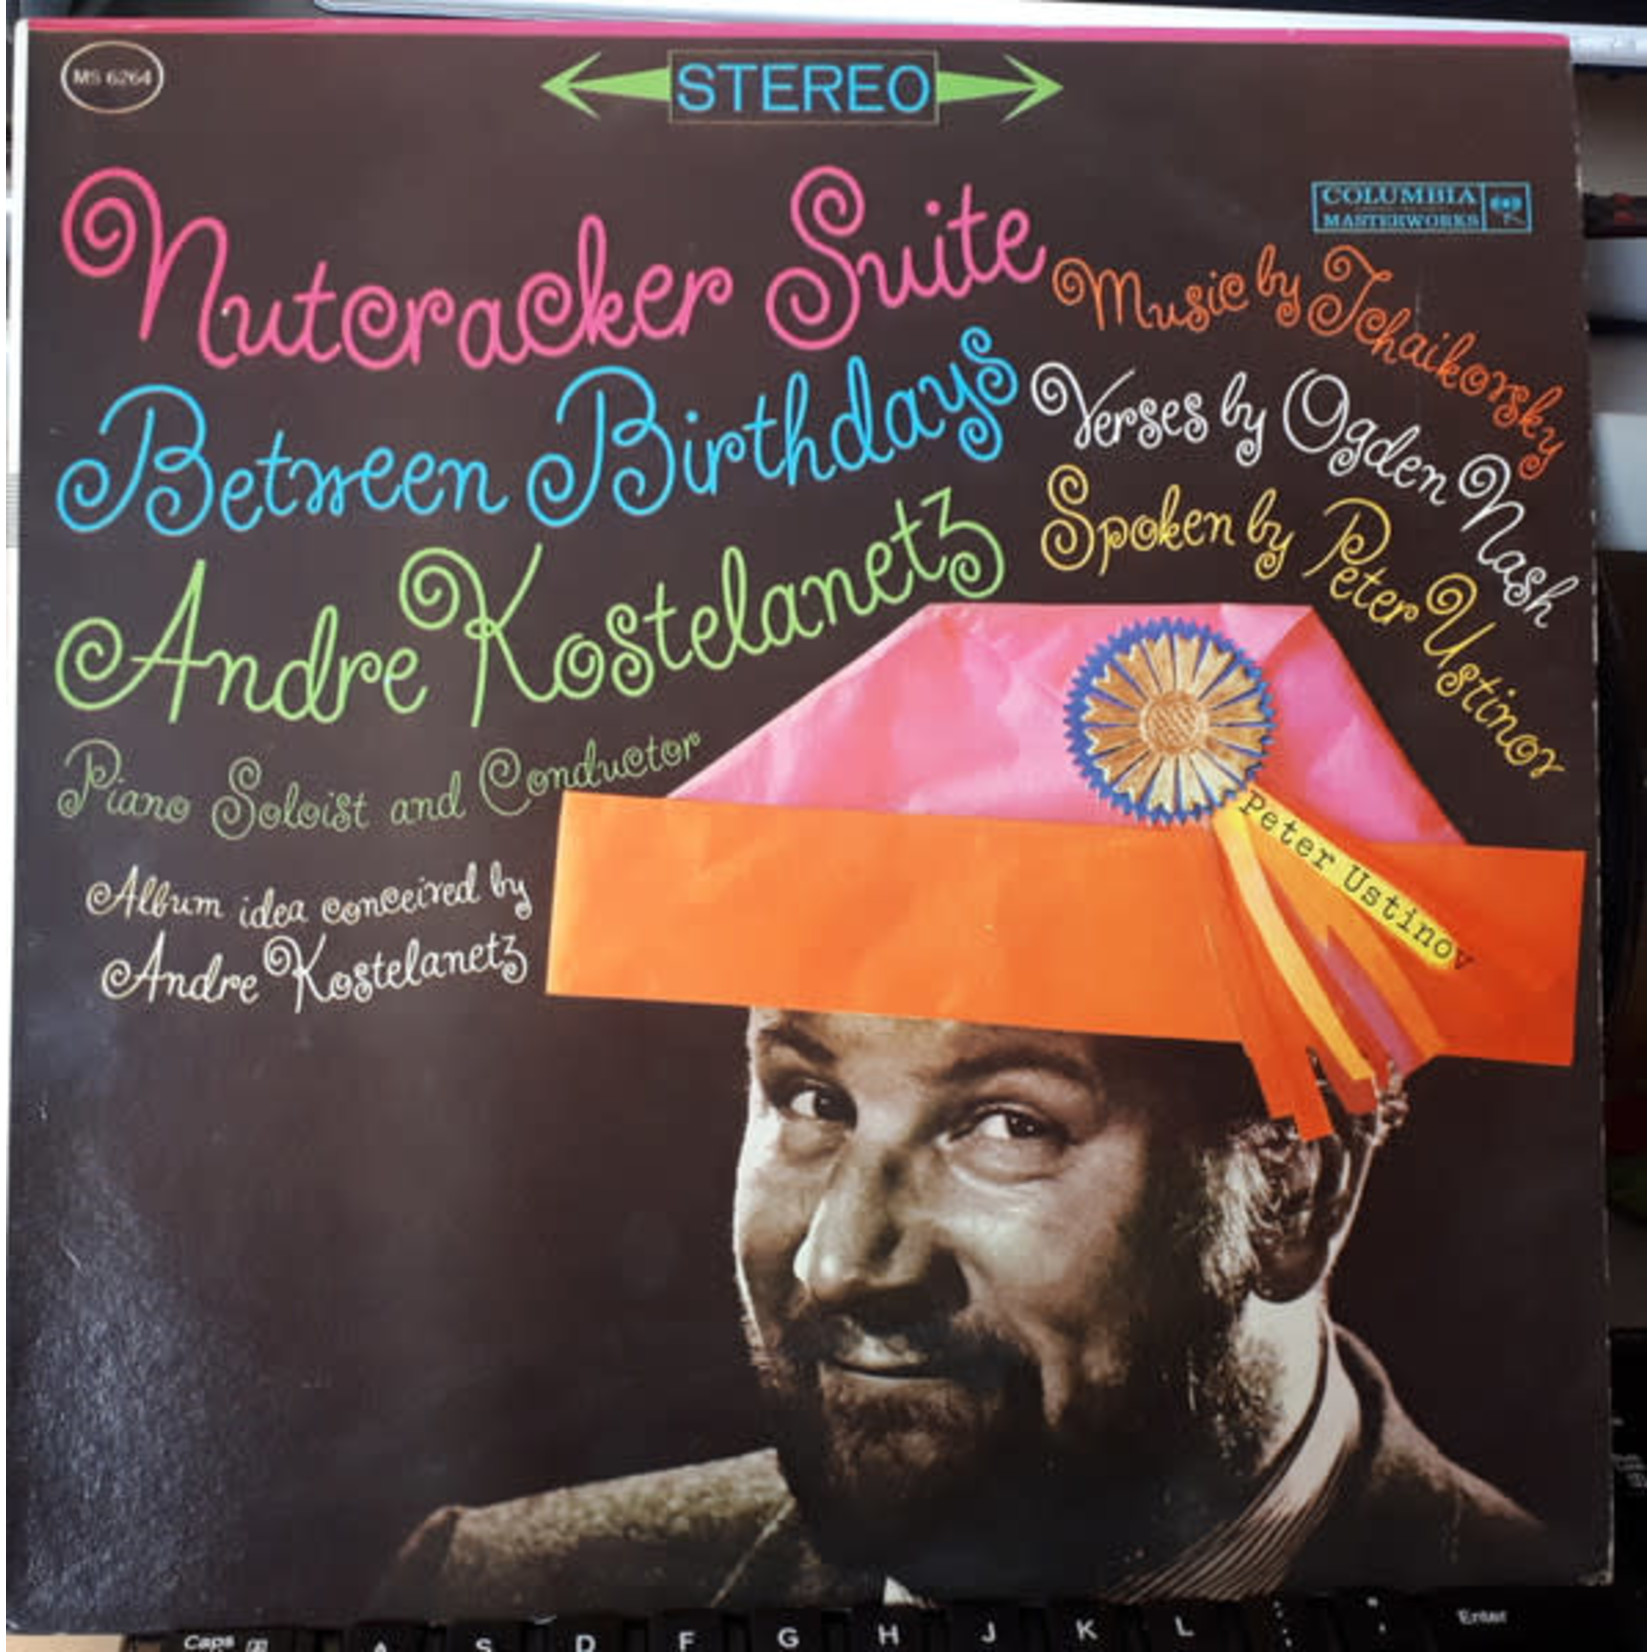 Bram Tchaikovsky Peter Ustinov, Ogden Nash, Tchaikovsky  – Nutcracker Suite / Between Birthdays (G, 1961, LP, Columbia Masterworks – MS 6264, Canada)